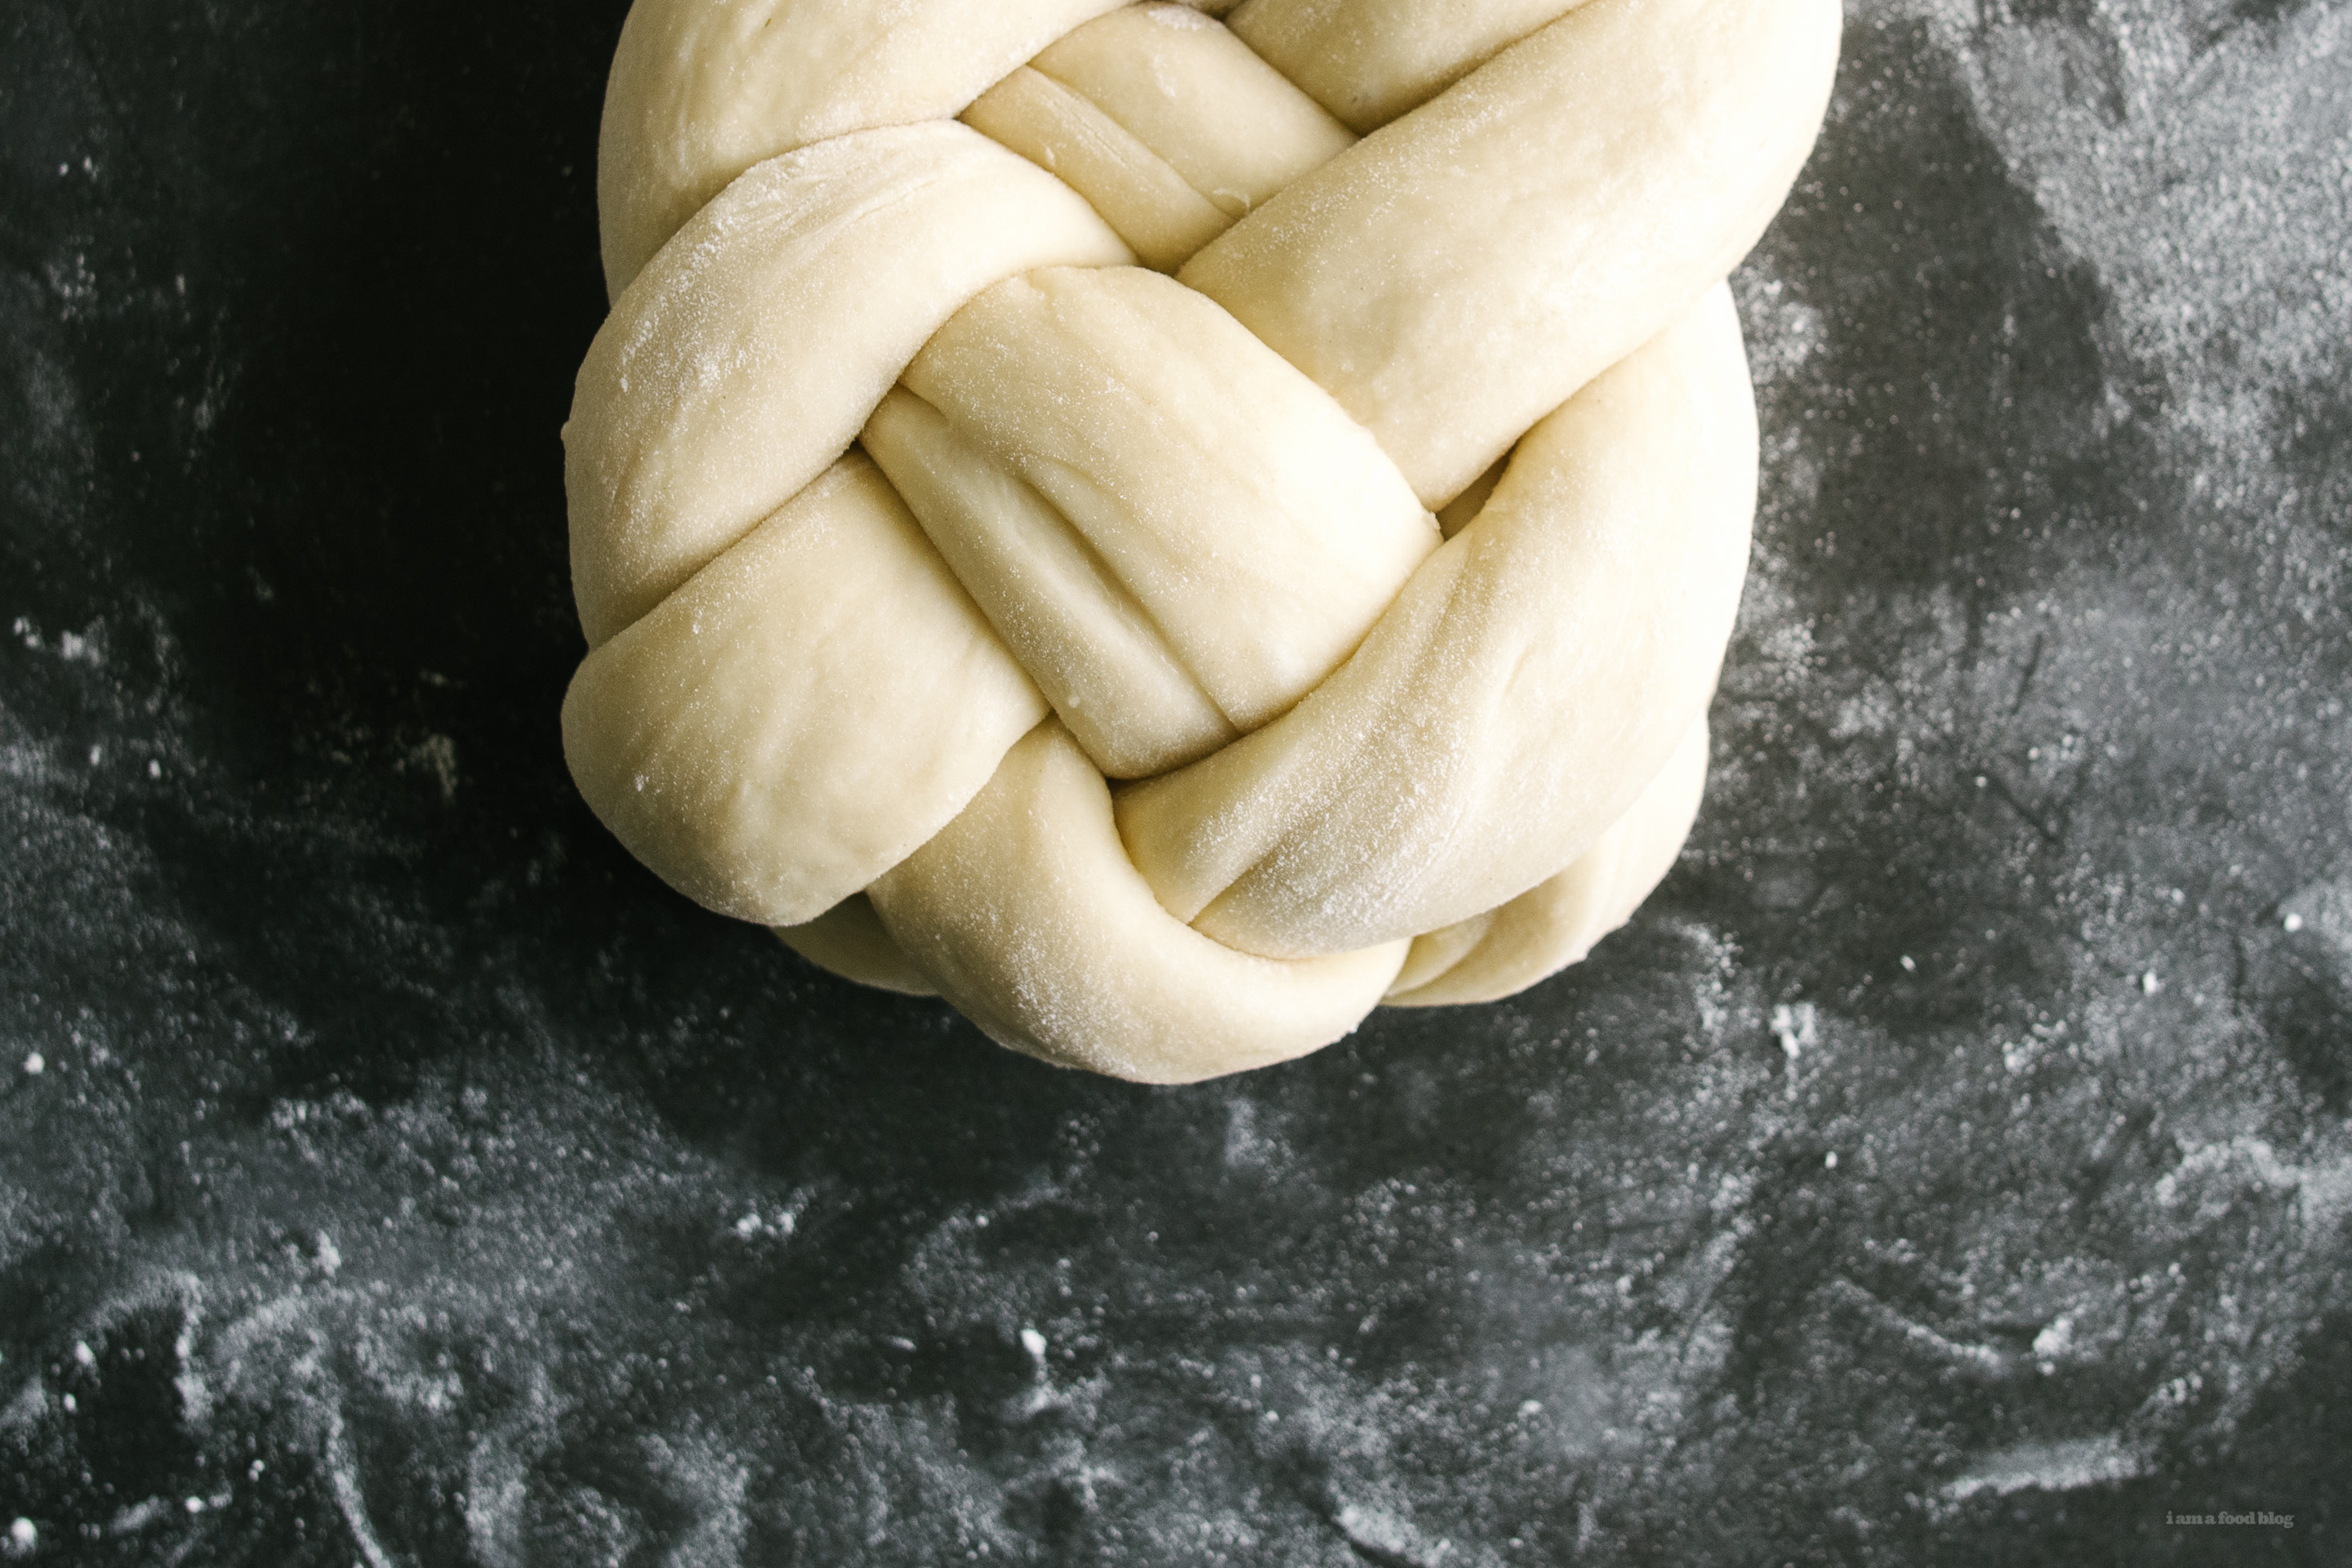 challah bread recipe - www.iamafoodblog.com